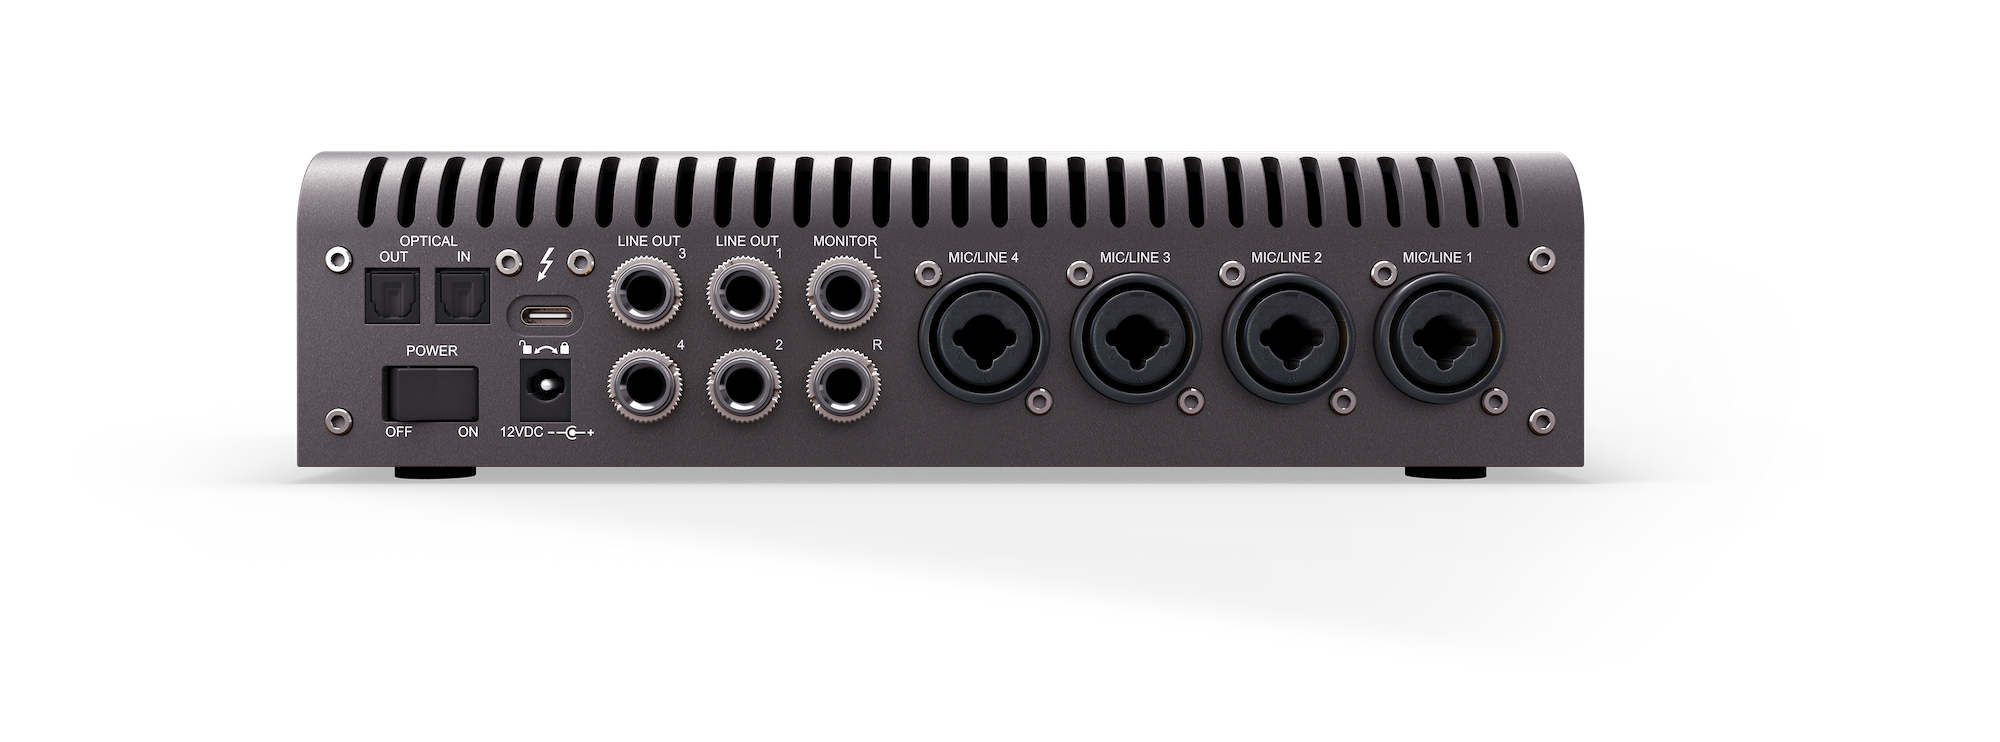 Universal Audio Apollo X4 - Interface de audio thunderbolt - Variation 2